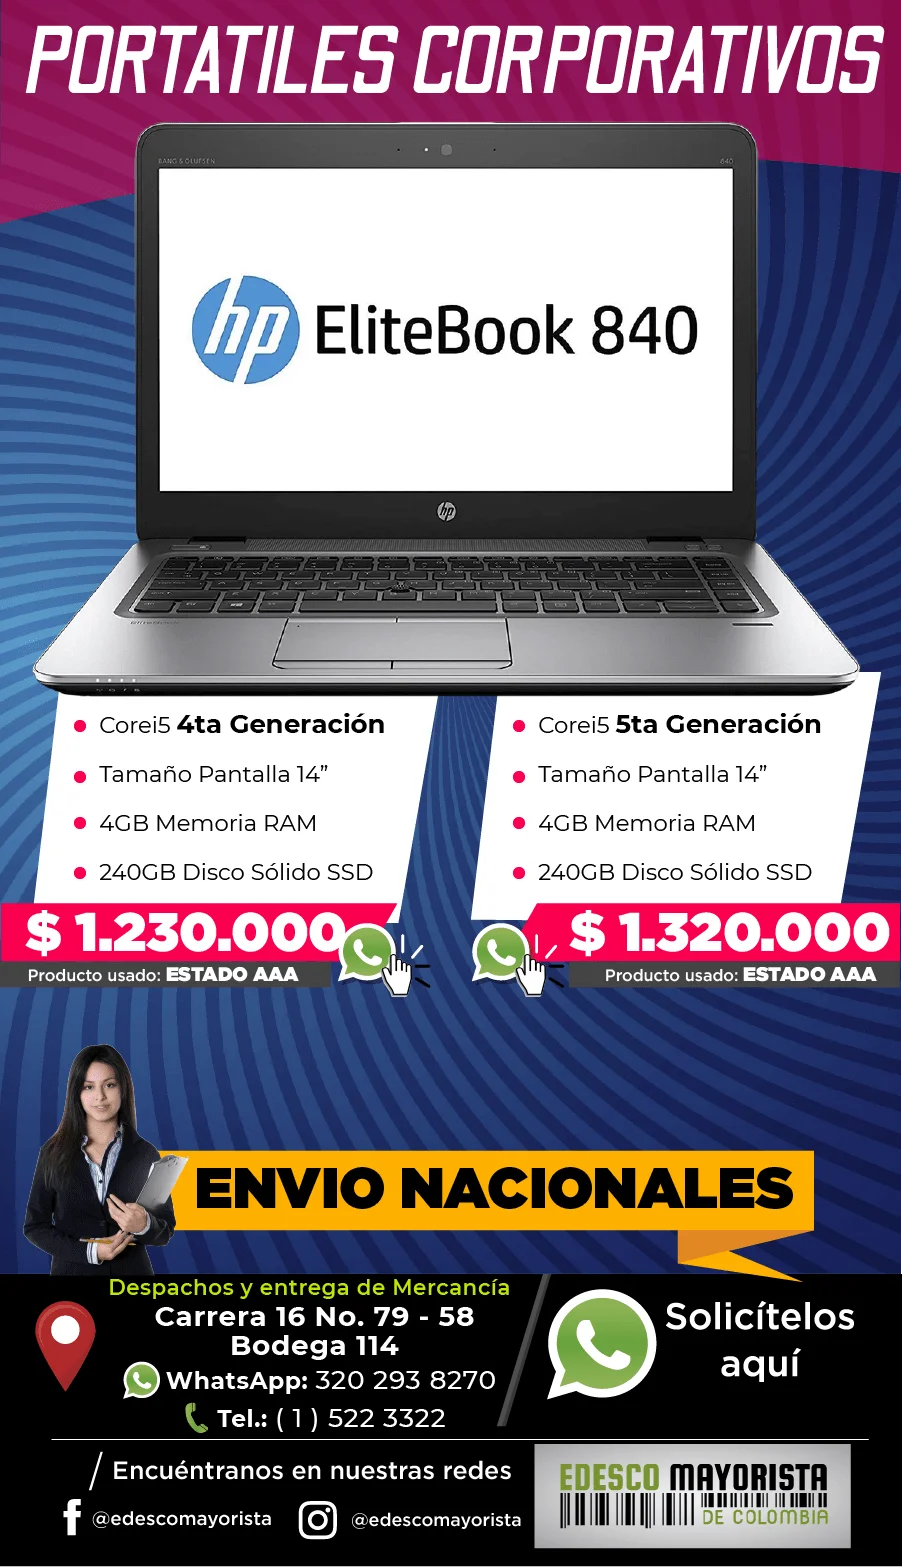 Portátil HP EliteBook 840 i5 5th